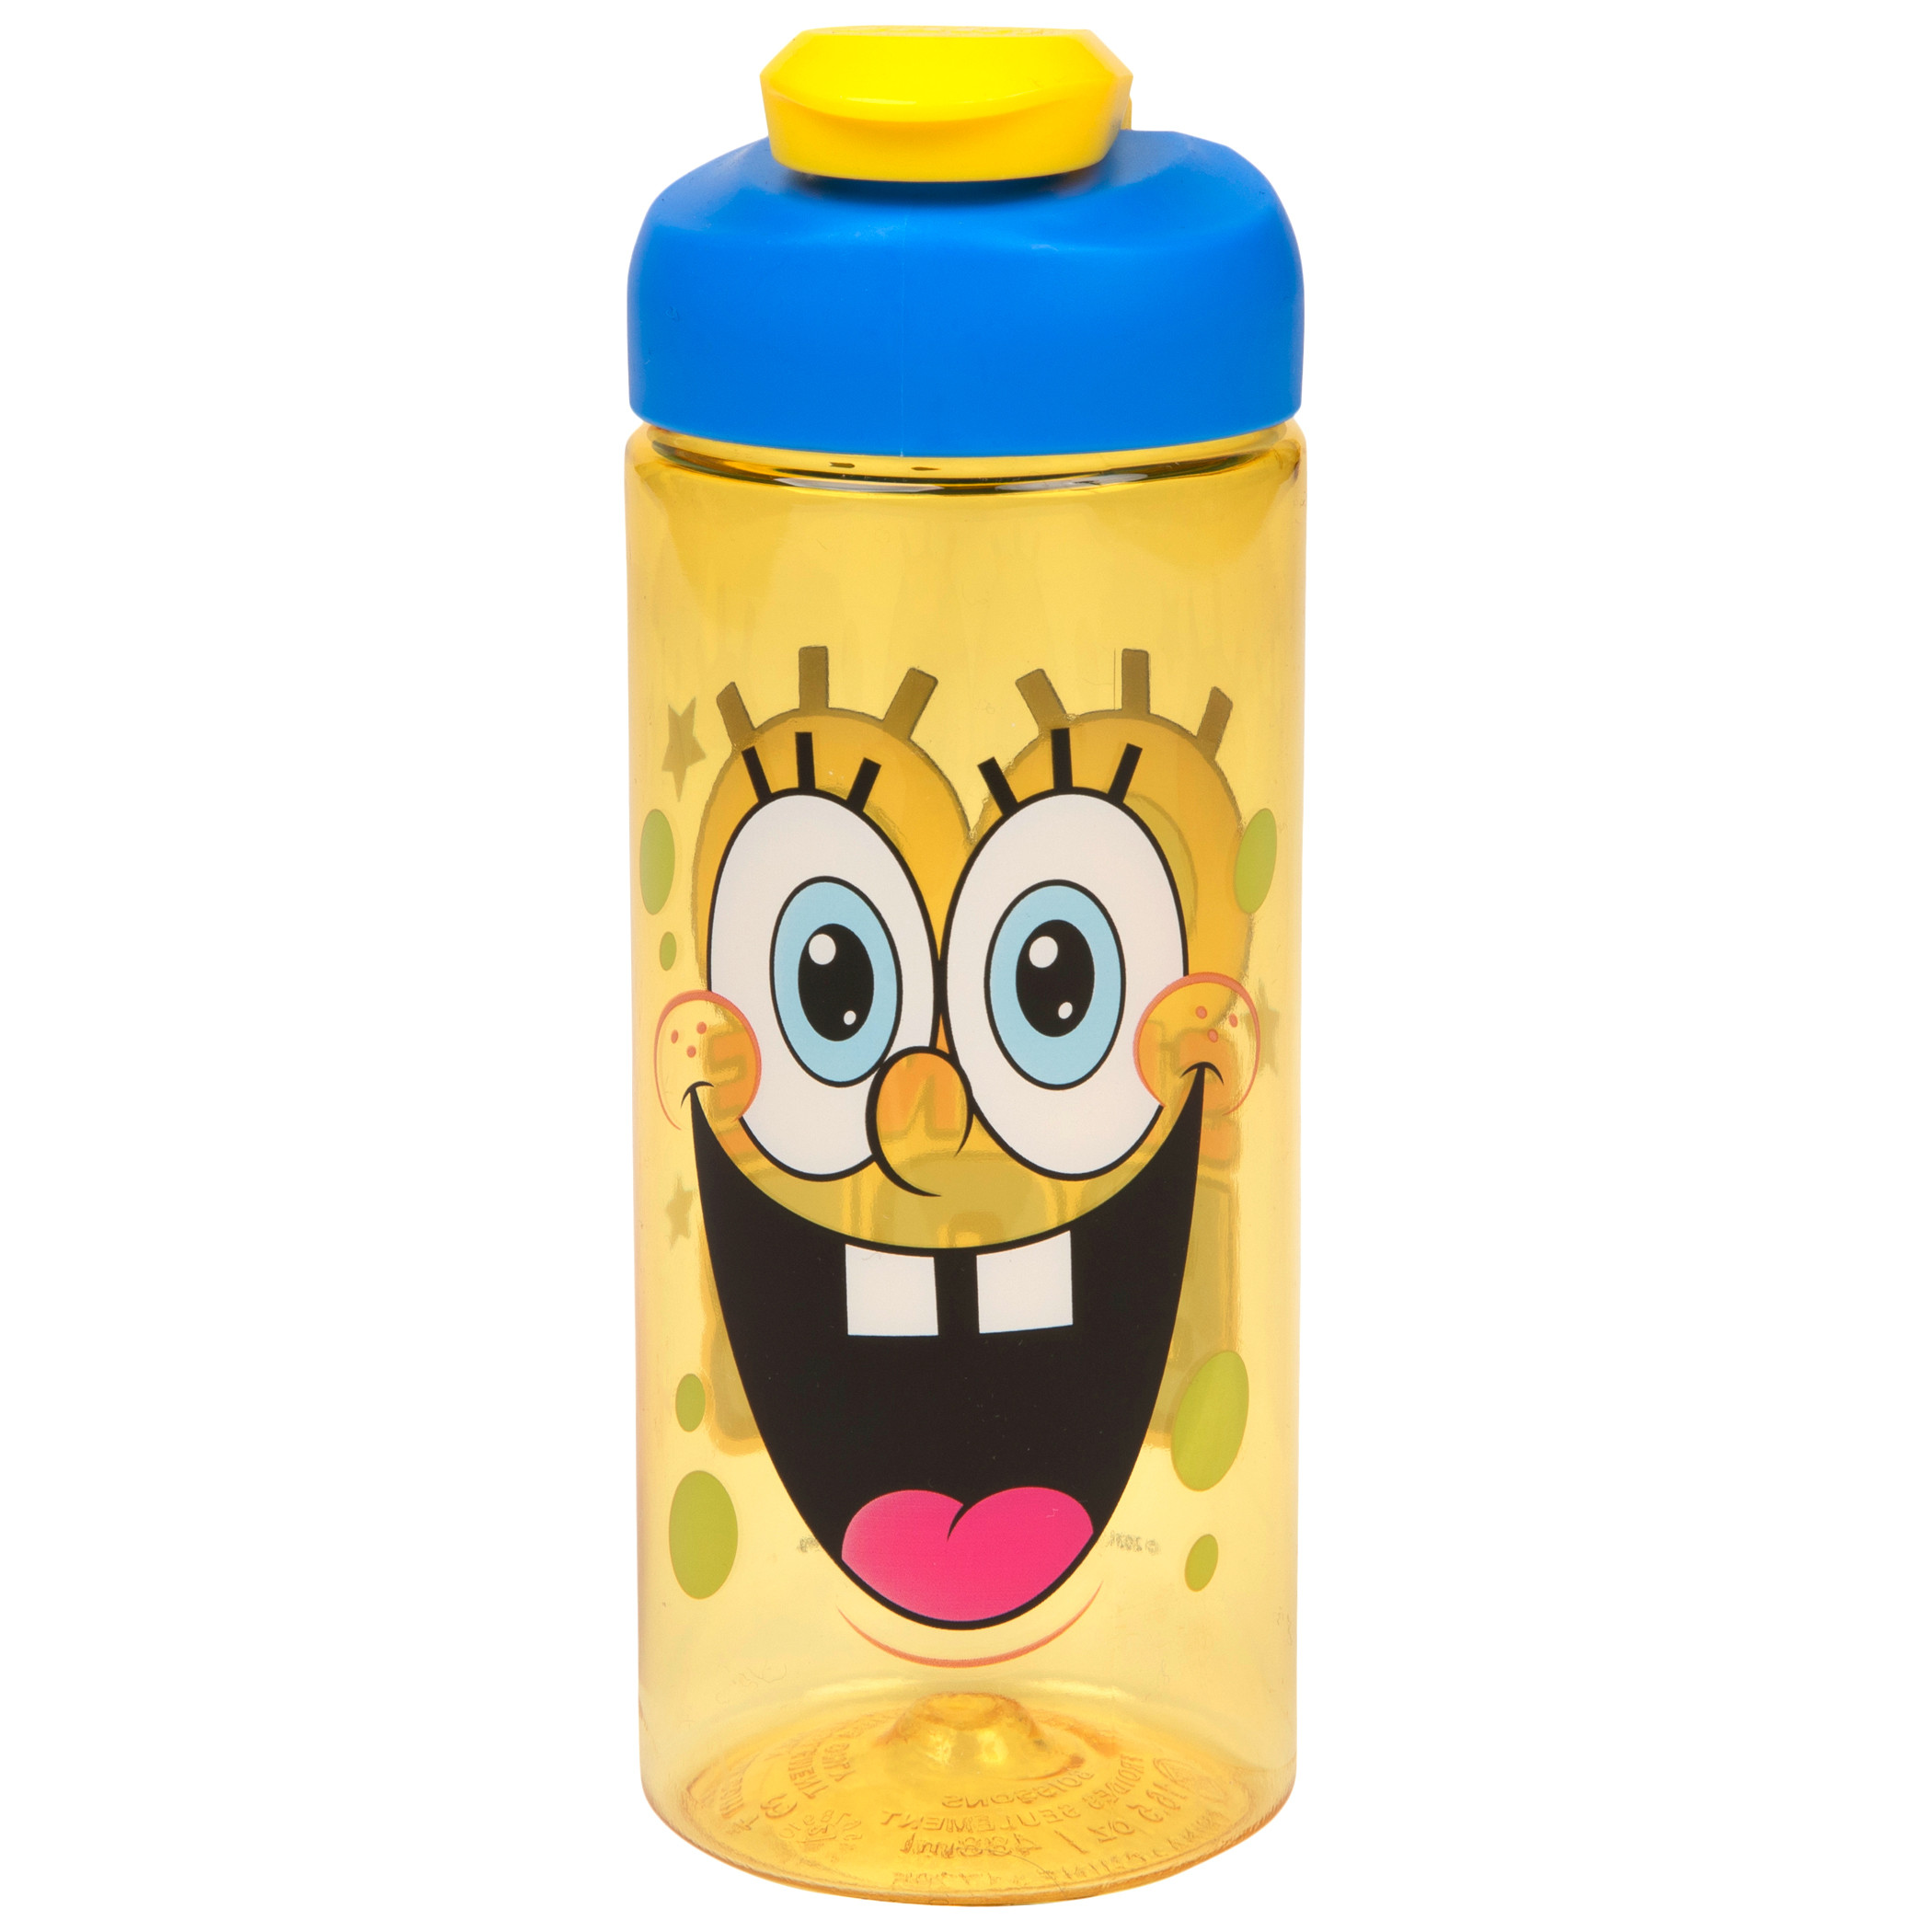 SpongeBob SquarePants 16.5oz Sullivan Bottle